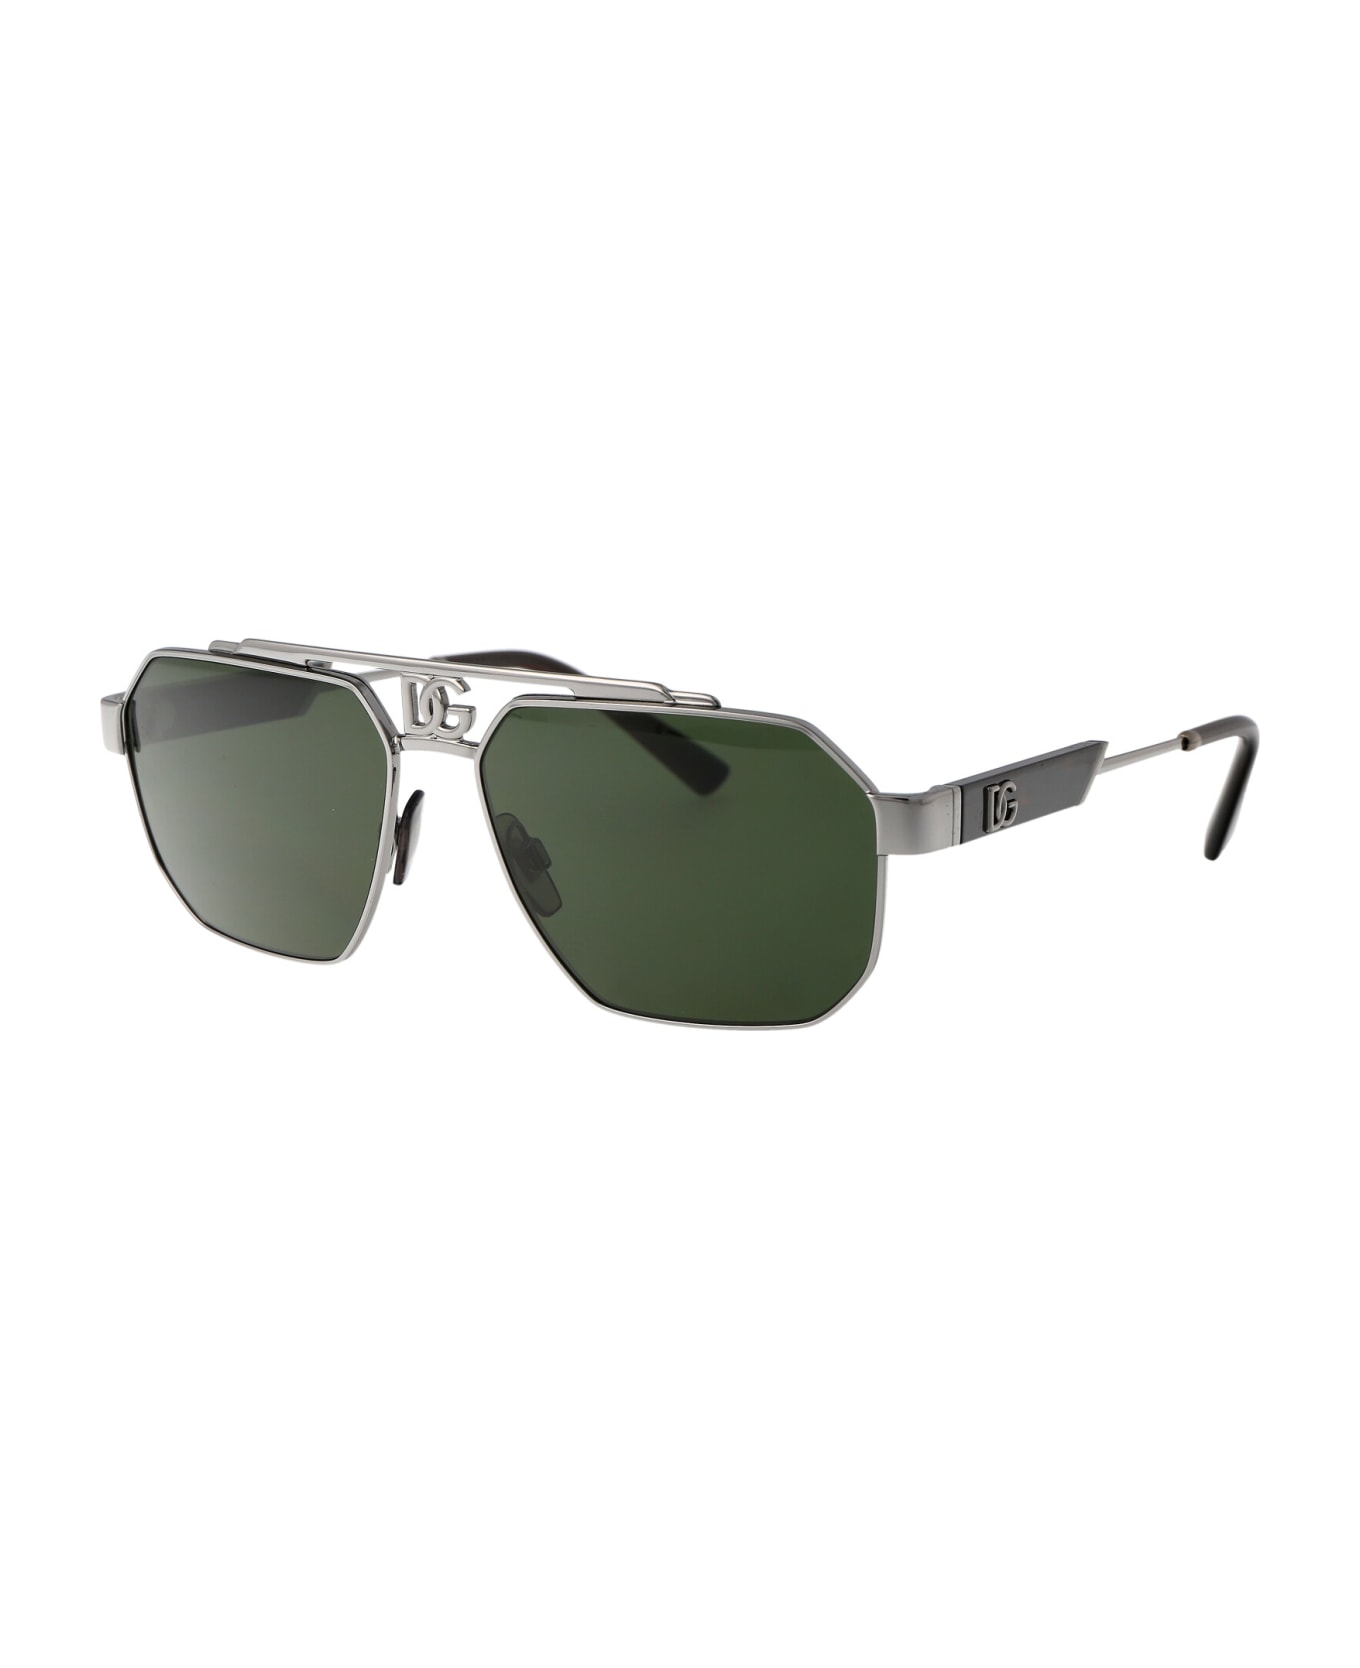 Dolce & Gabbana Eyewear 0dg2294 Sunglasses - 04/71 Gunmetal